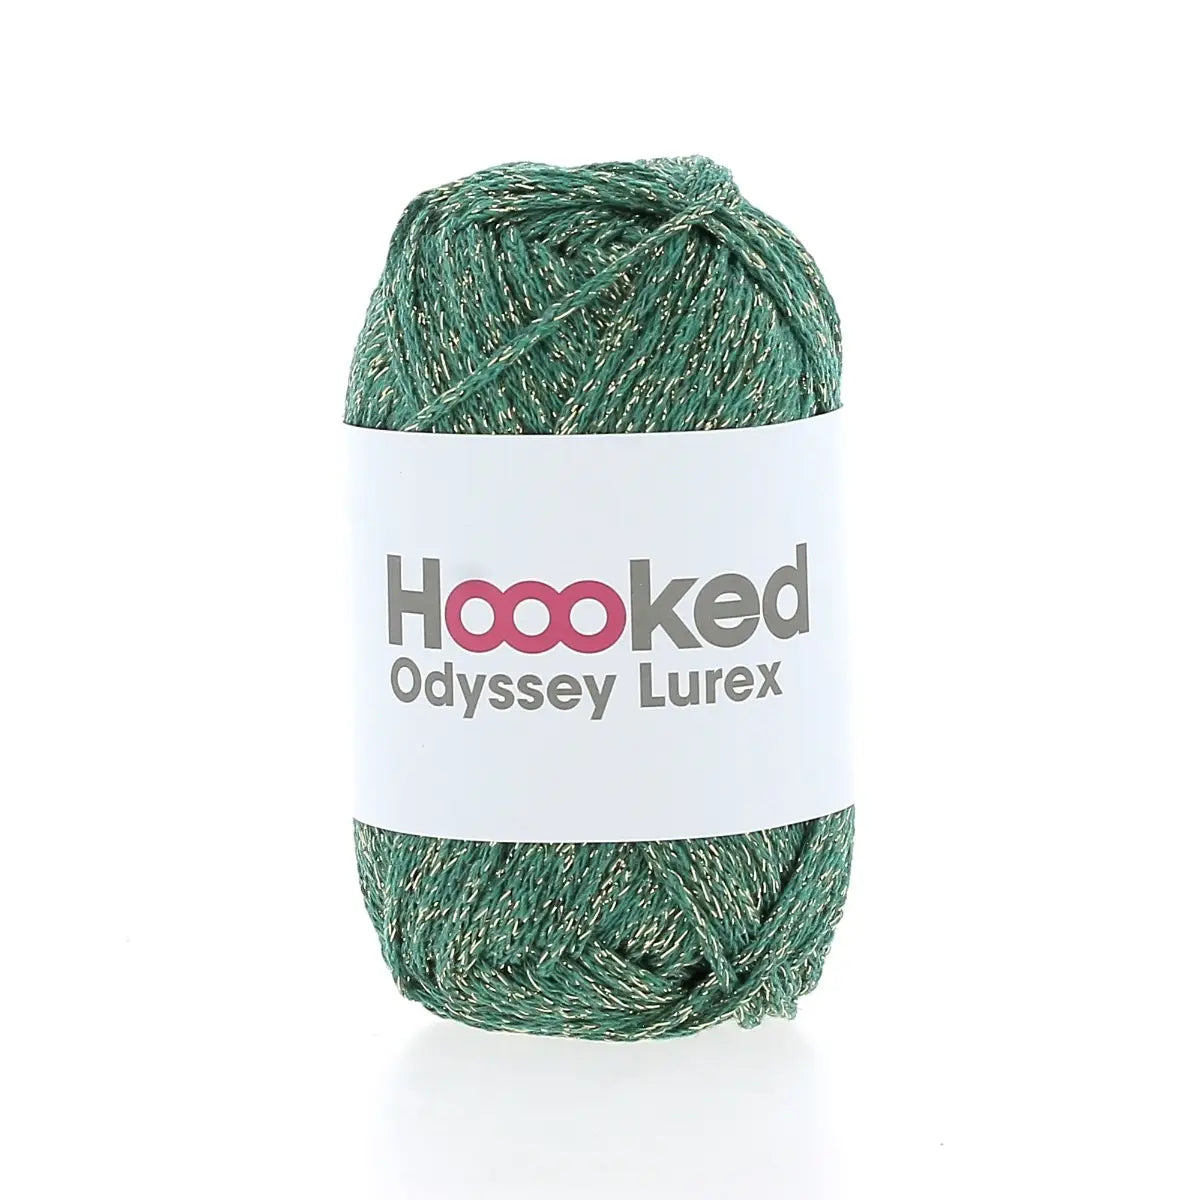 Hoooked Odyssey Lurex